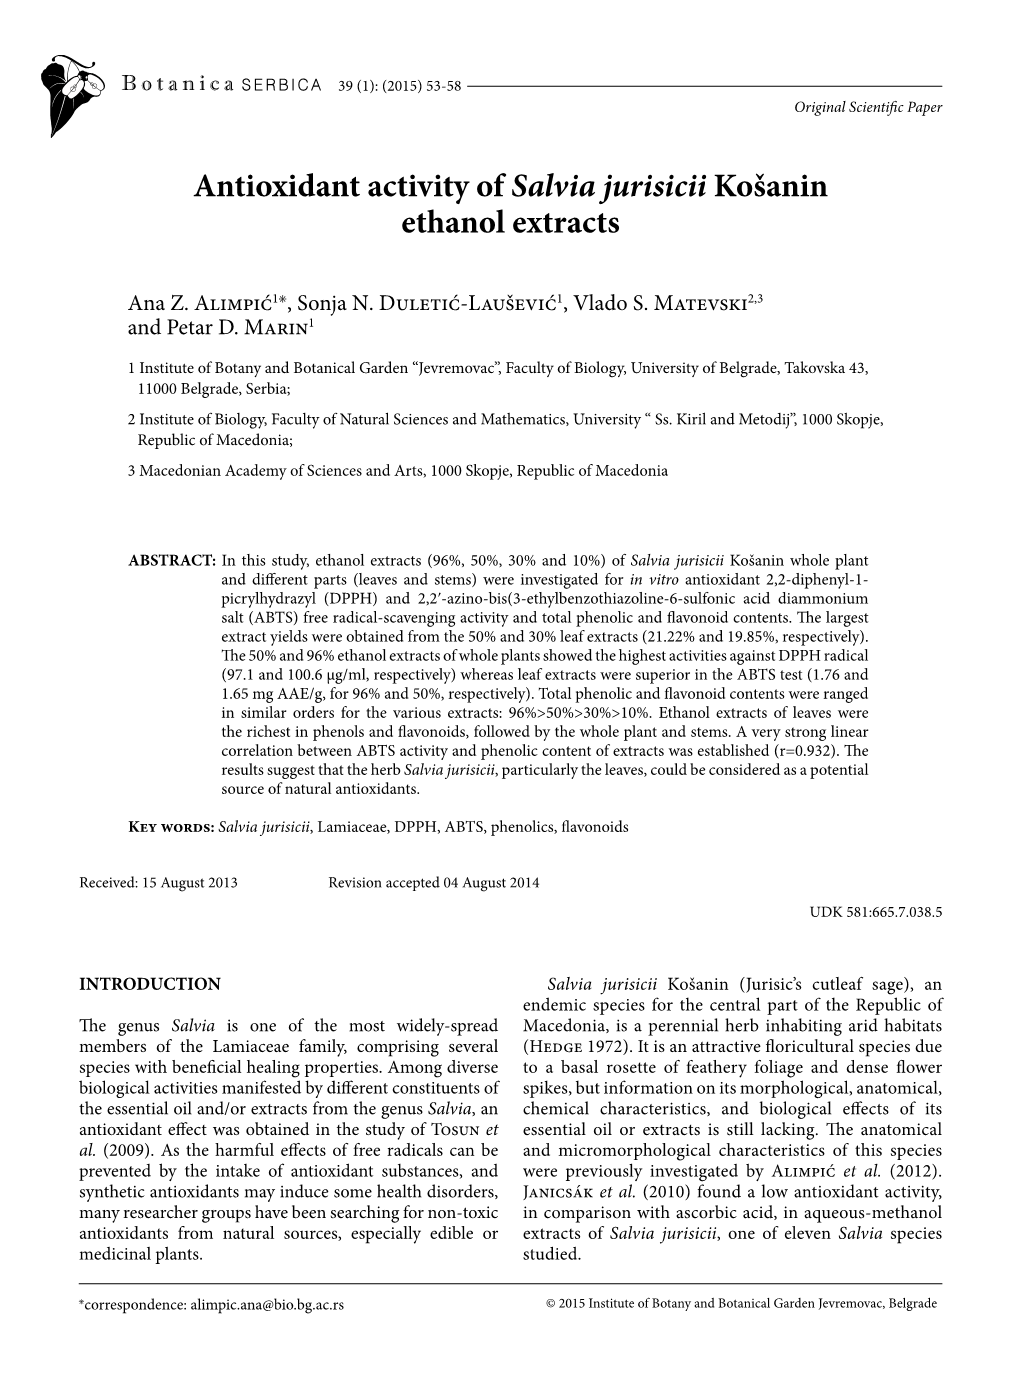 Antioxidant Activity of Salvia Jurisicii Košanin Ethanol Extracts